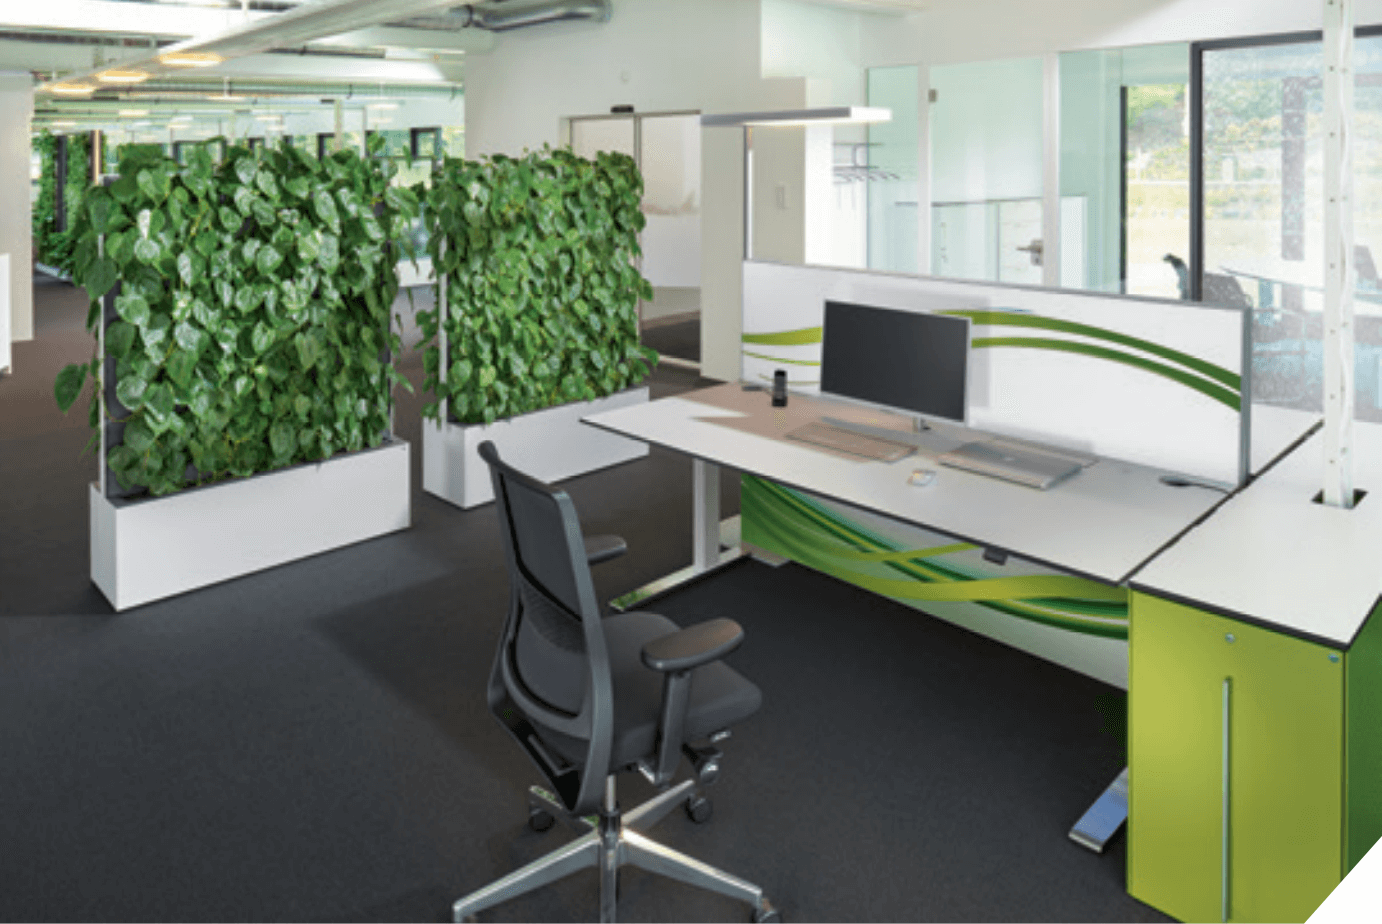 Office-plants-interior-plantscaping-whitepaper